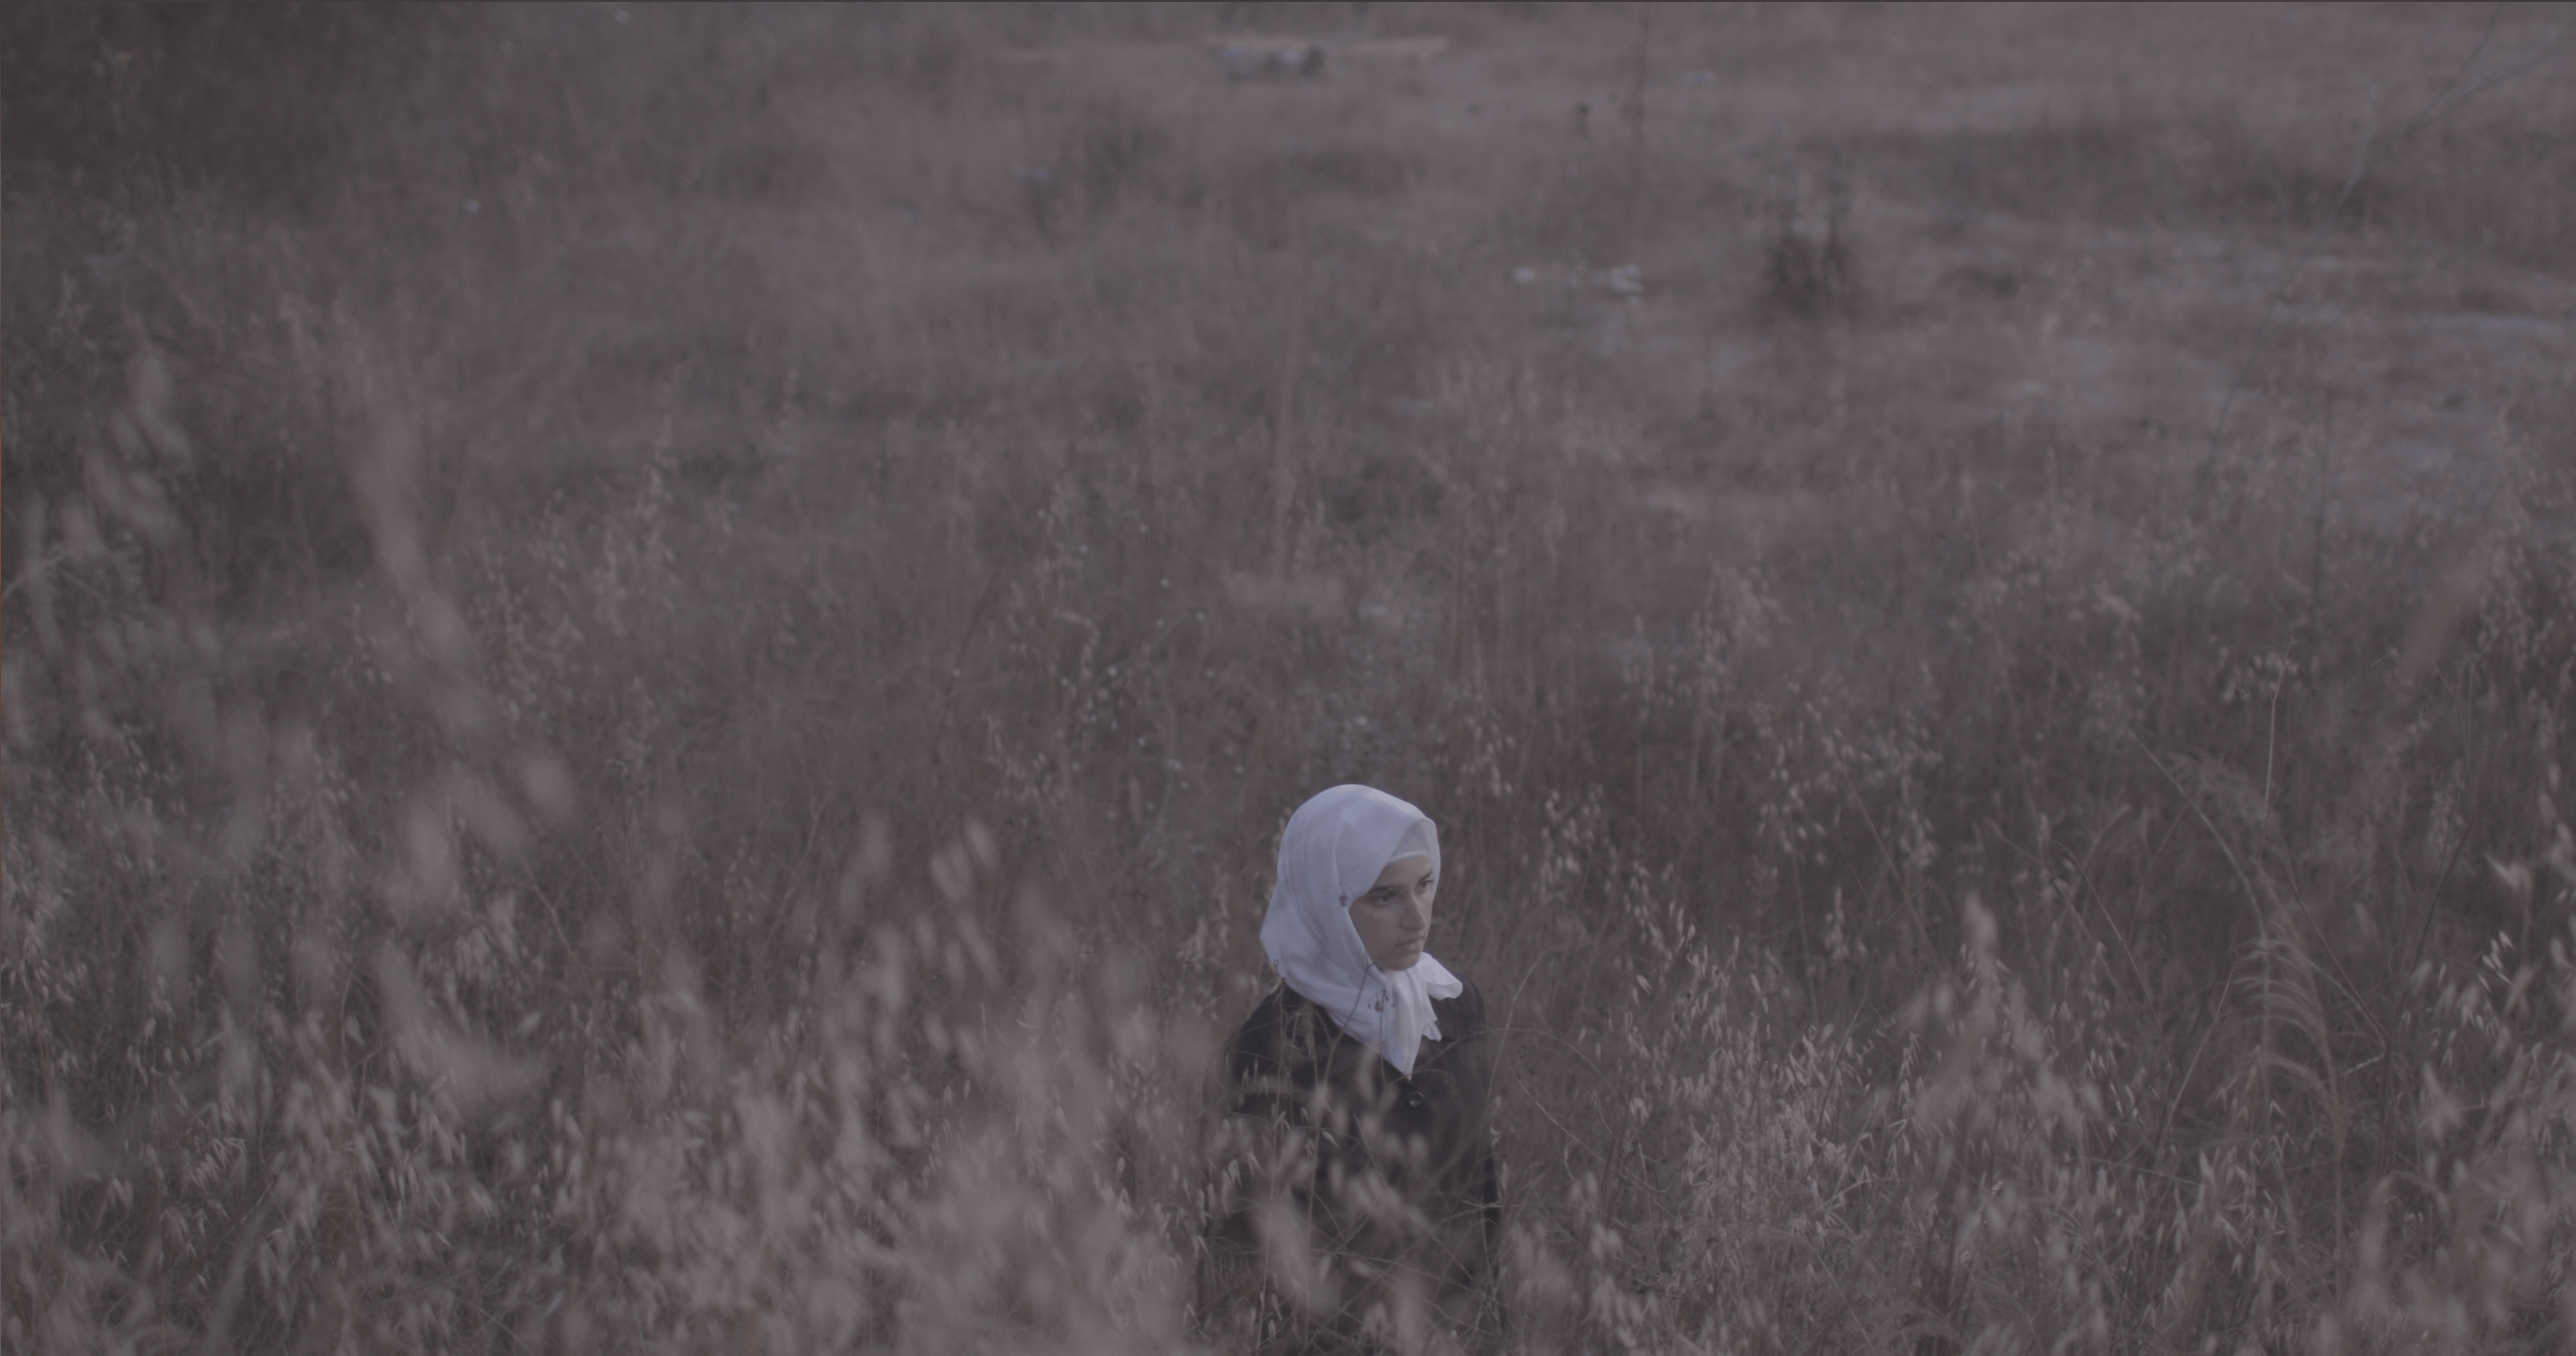 Still from Q. A woman wearing a hijab is walking through a field.